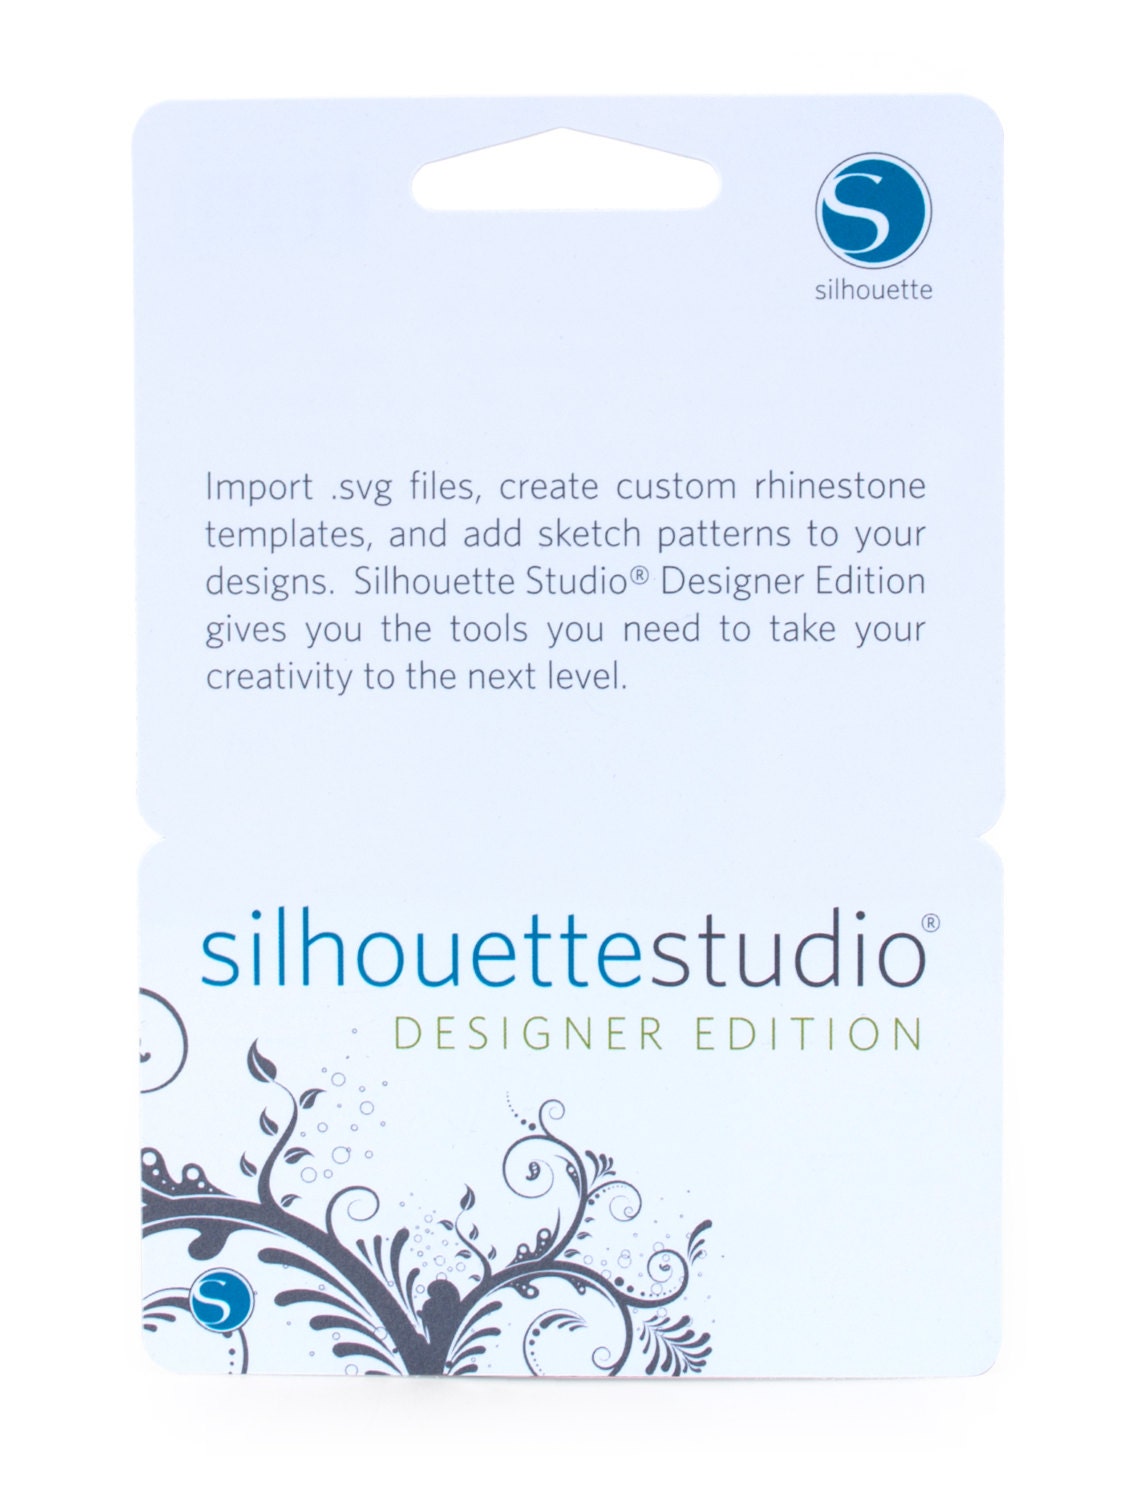 how to upgrade to silhouette studio designer edition